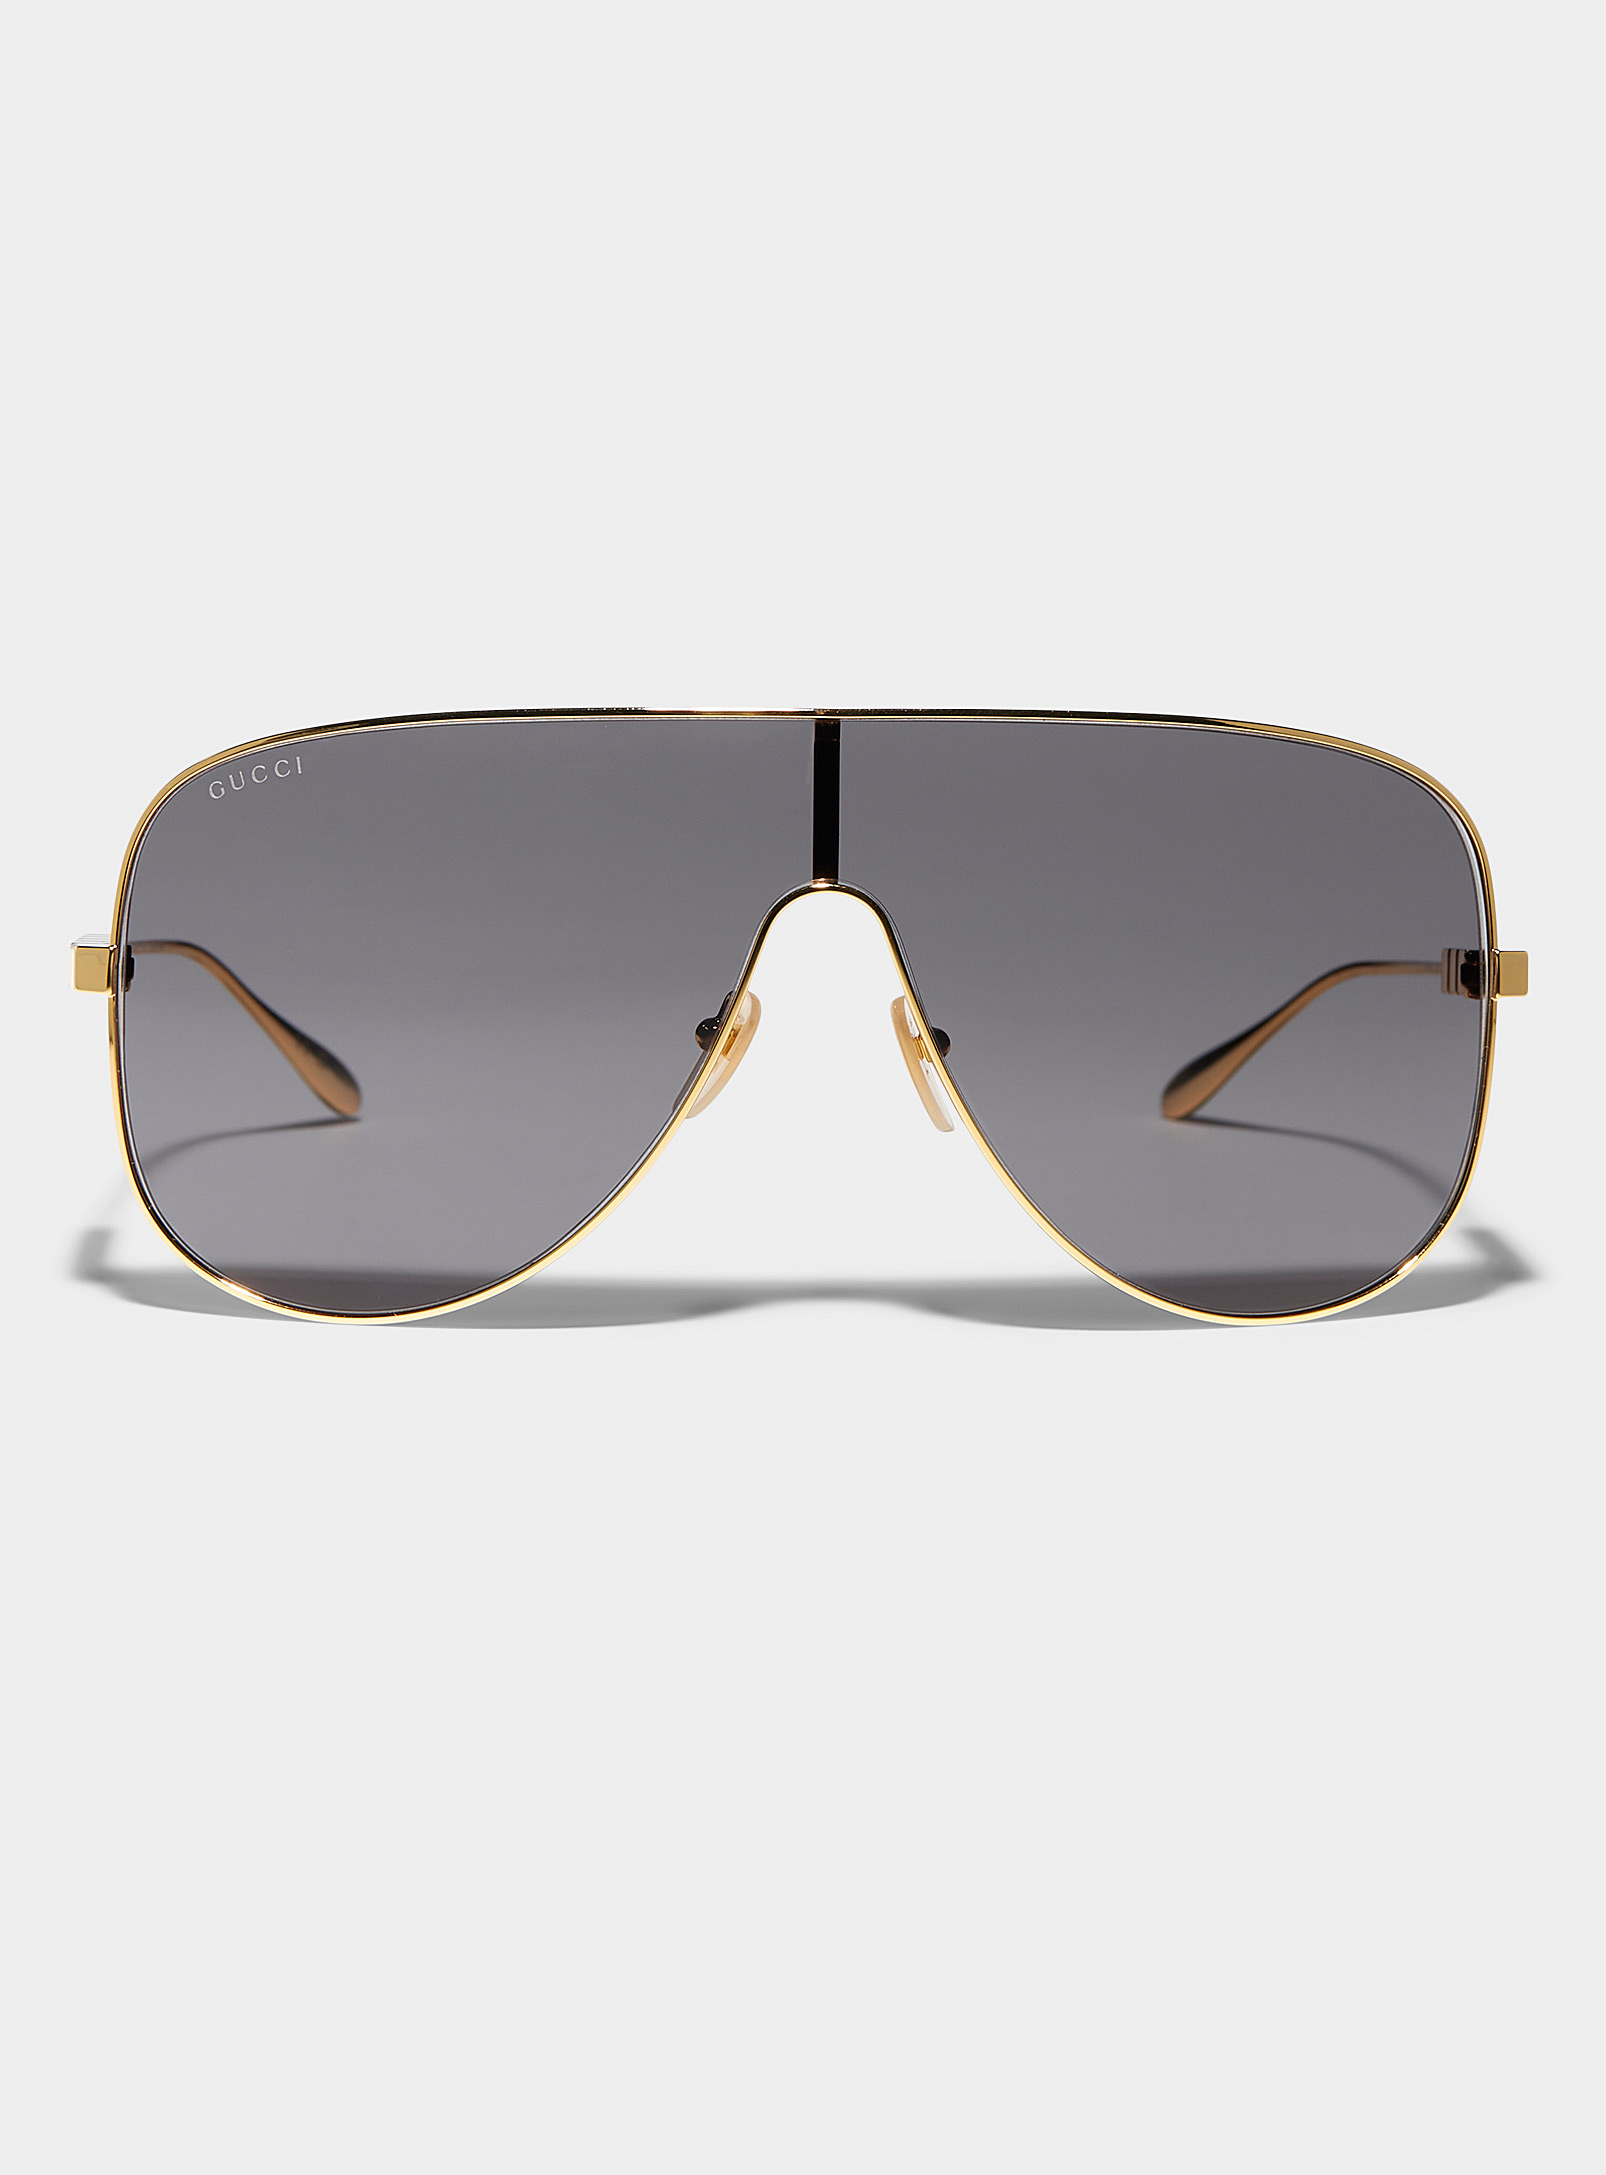 Gucci - Women's Golden visor sunglasses